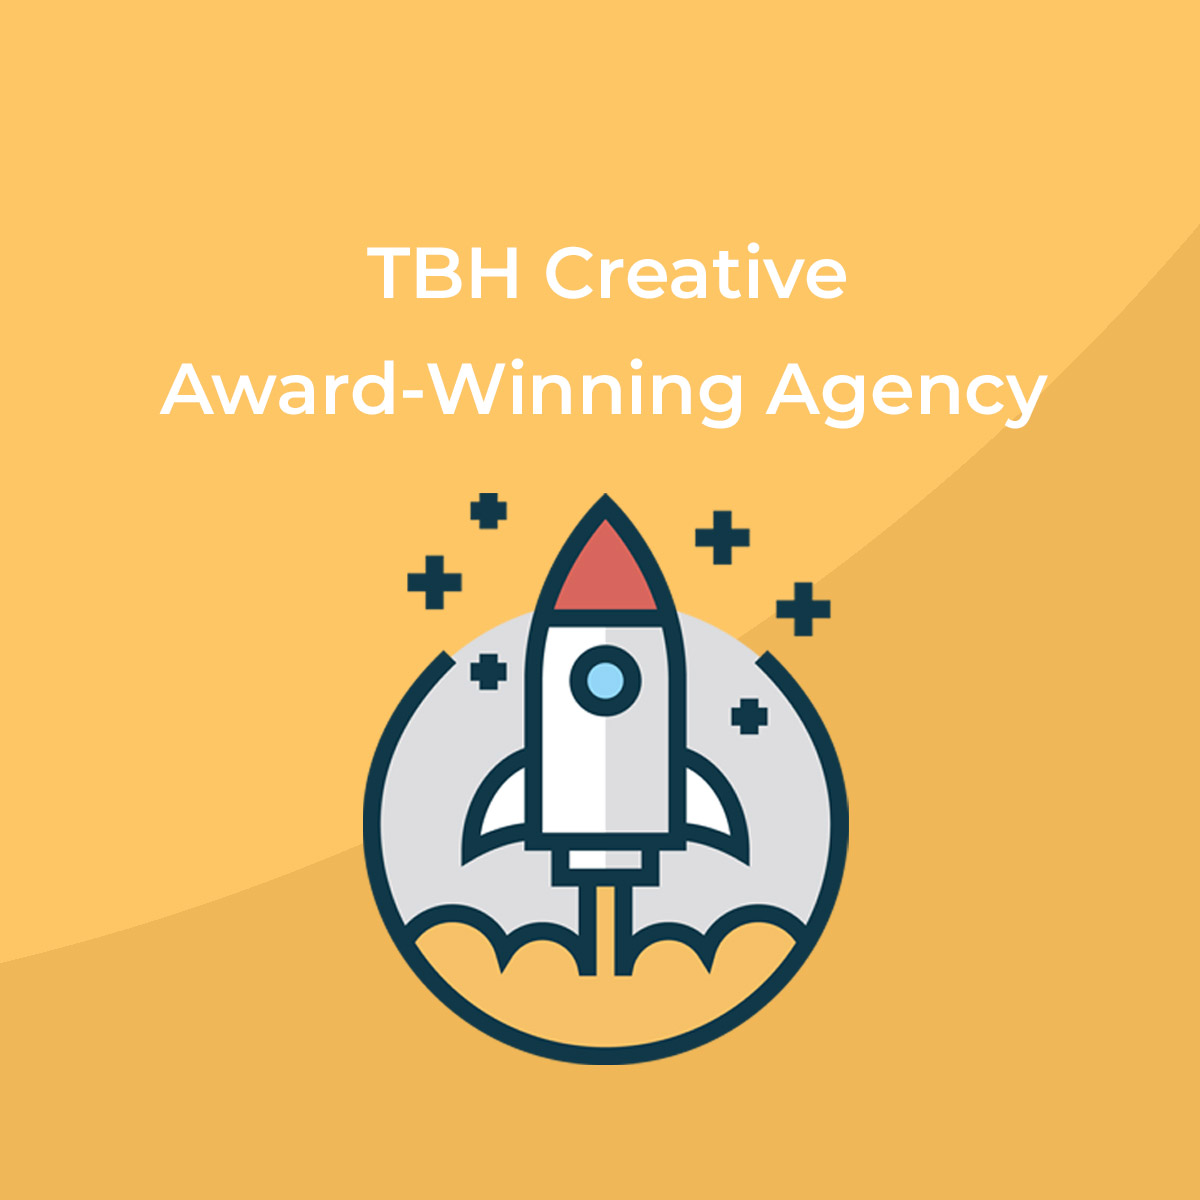 TBH Creative Award-Winning Agency